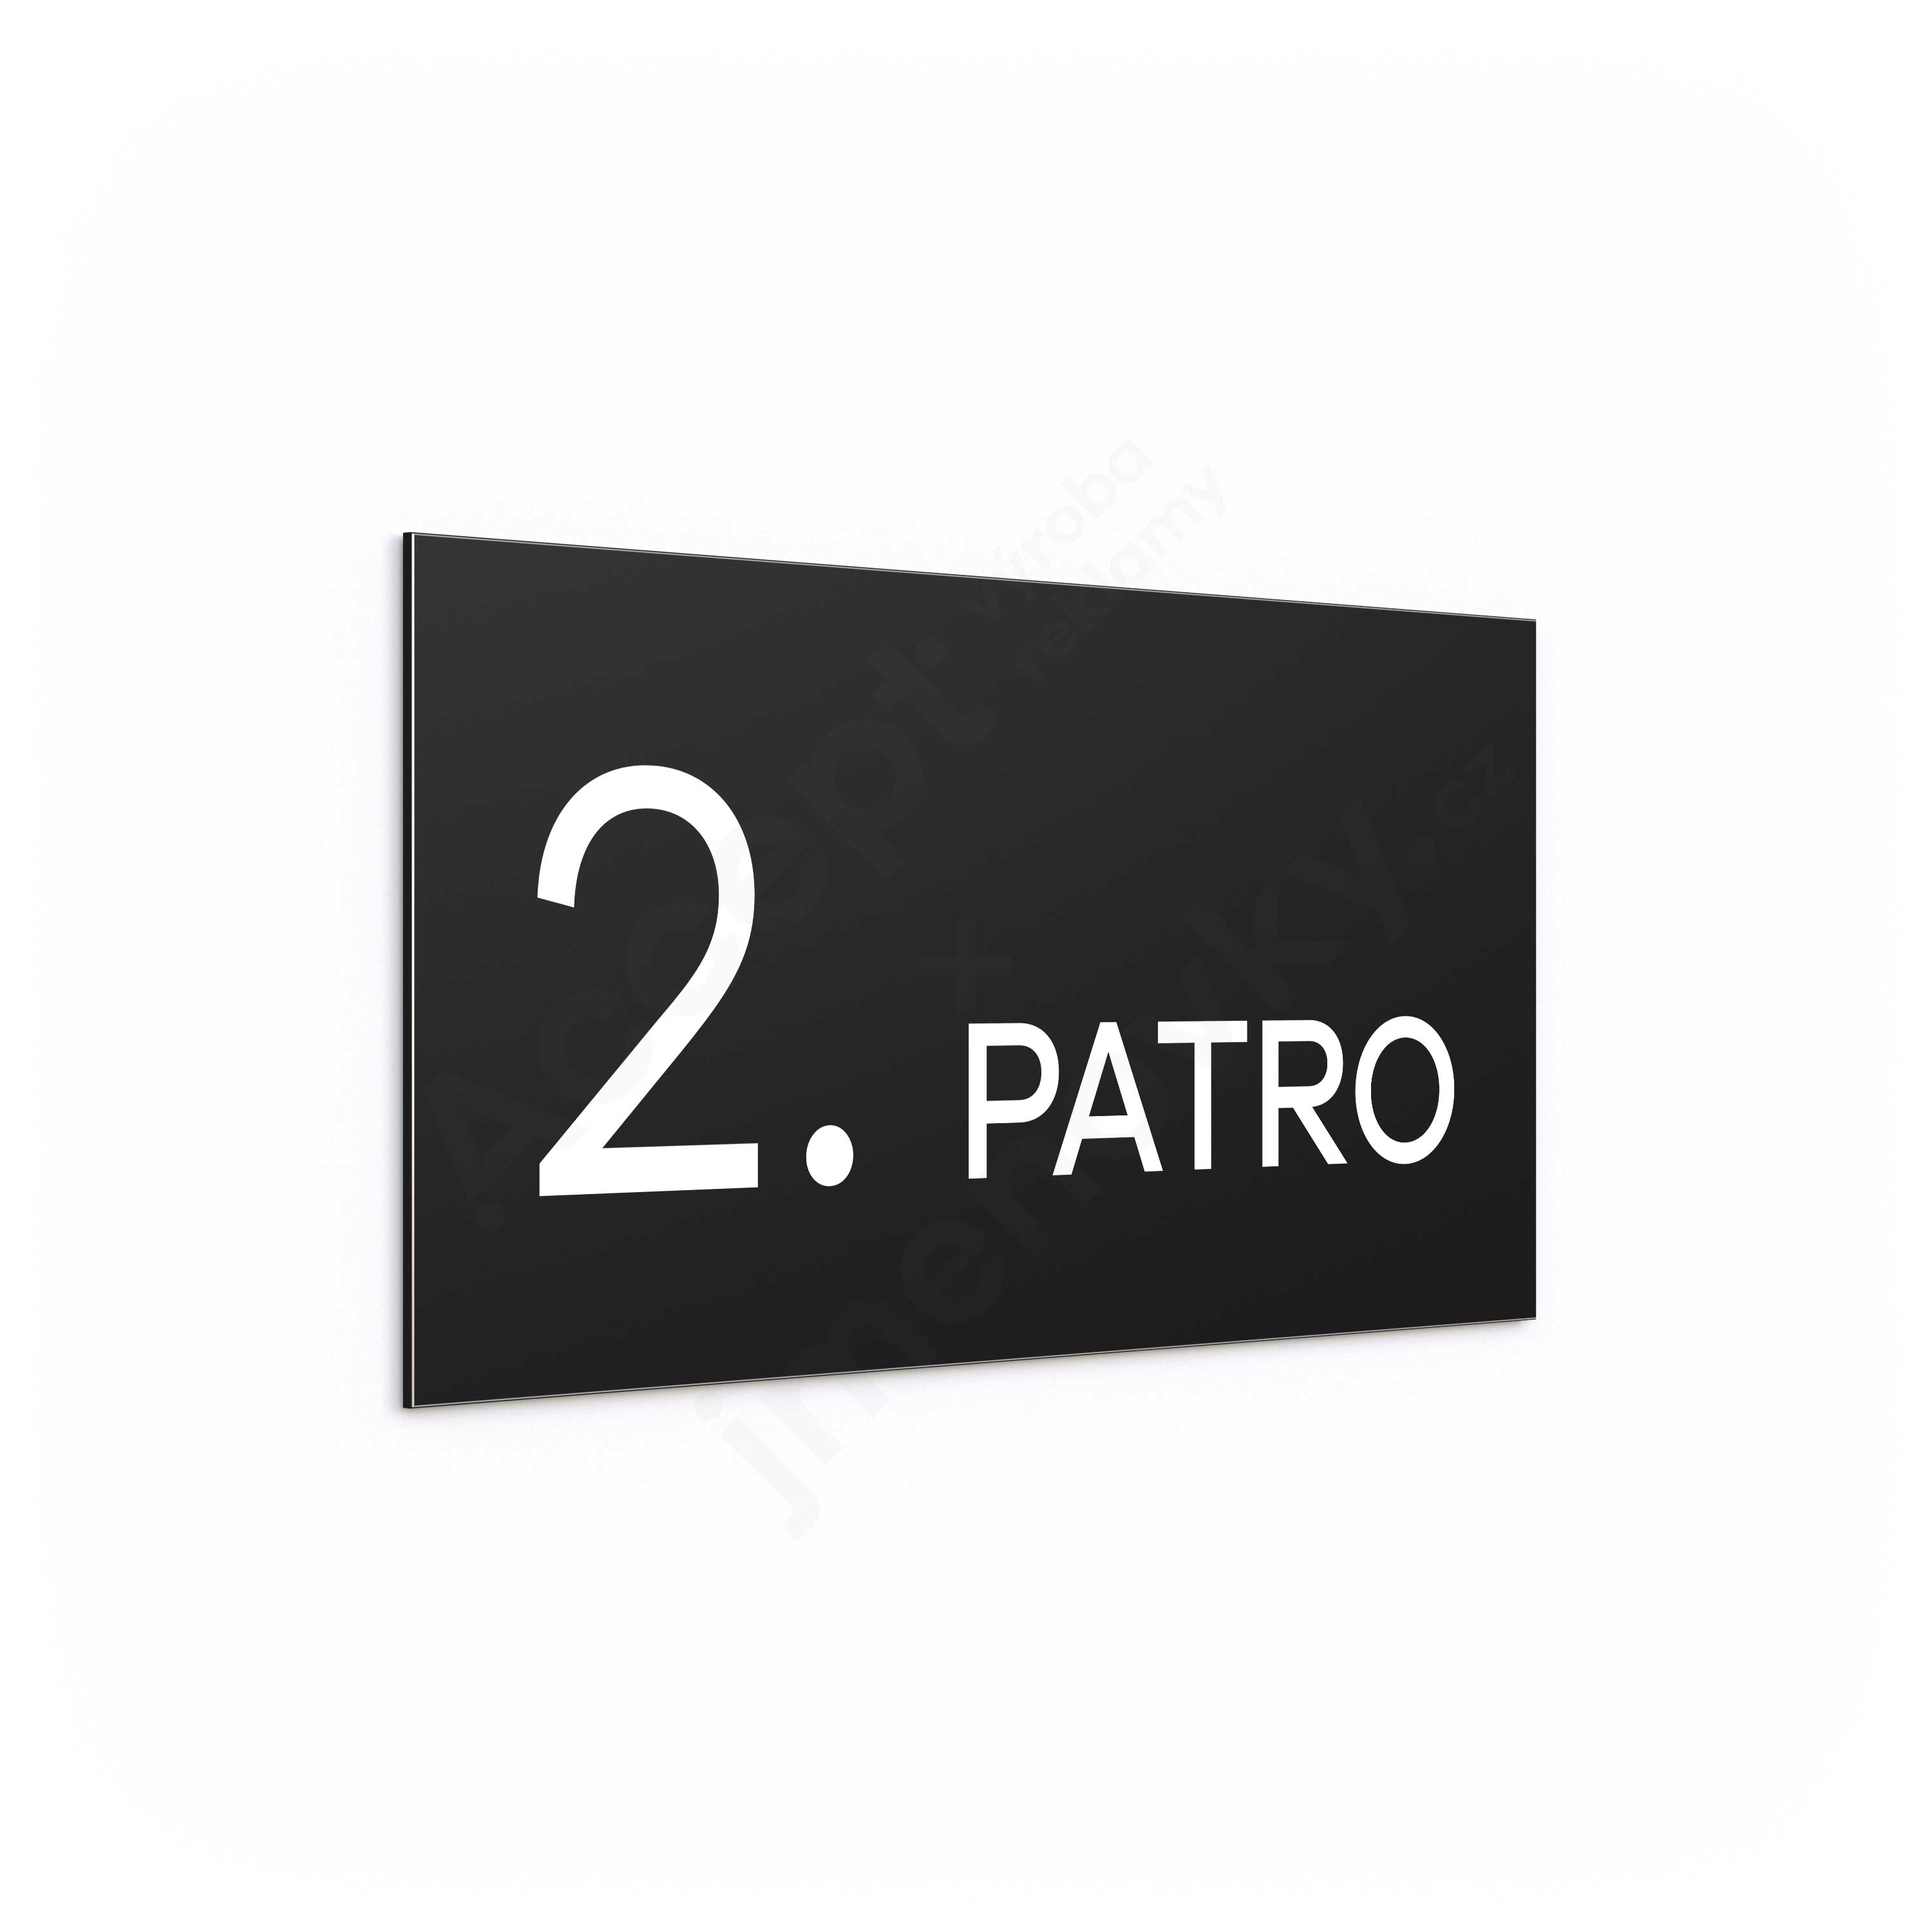 Označení podlaží "2. PATRO" - černá tabulka - bílý popis